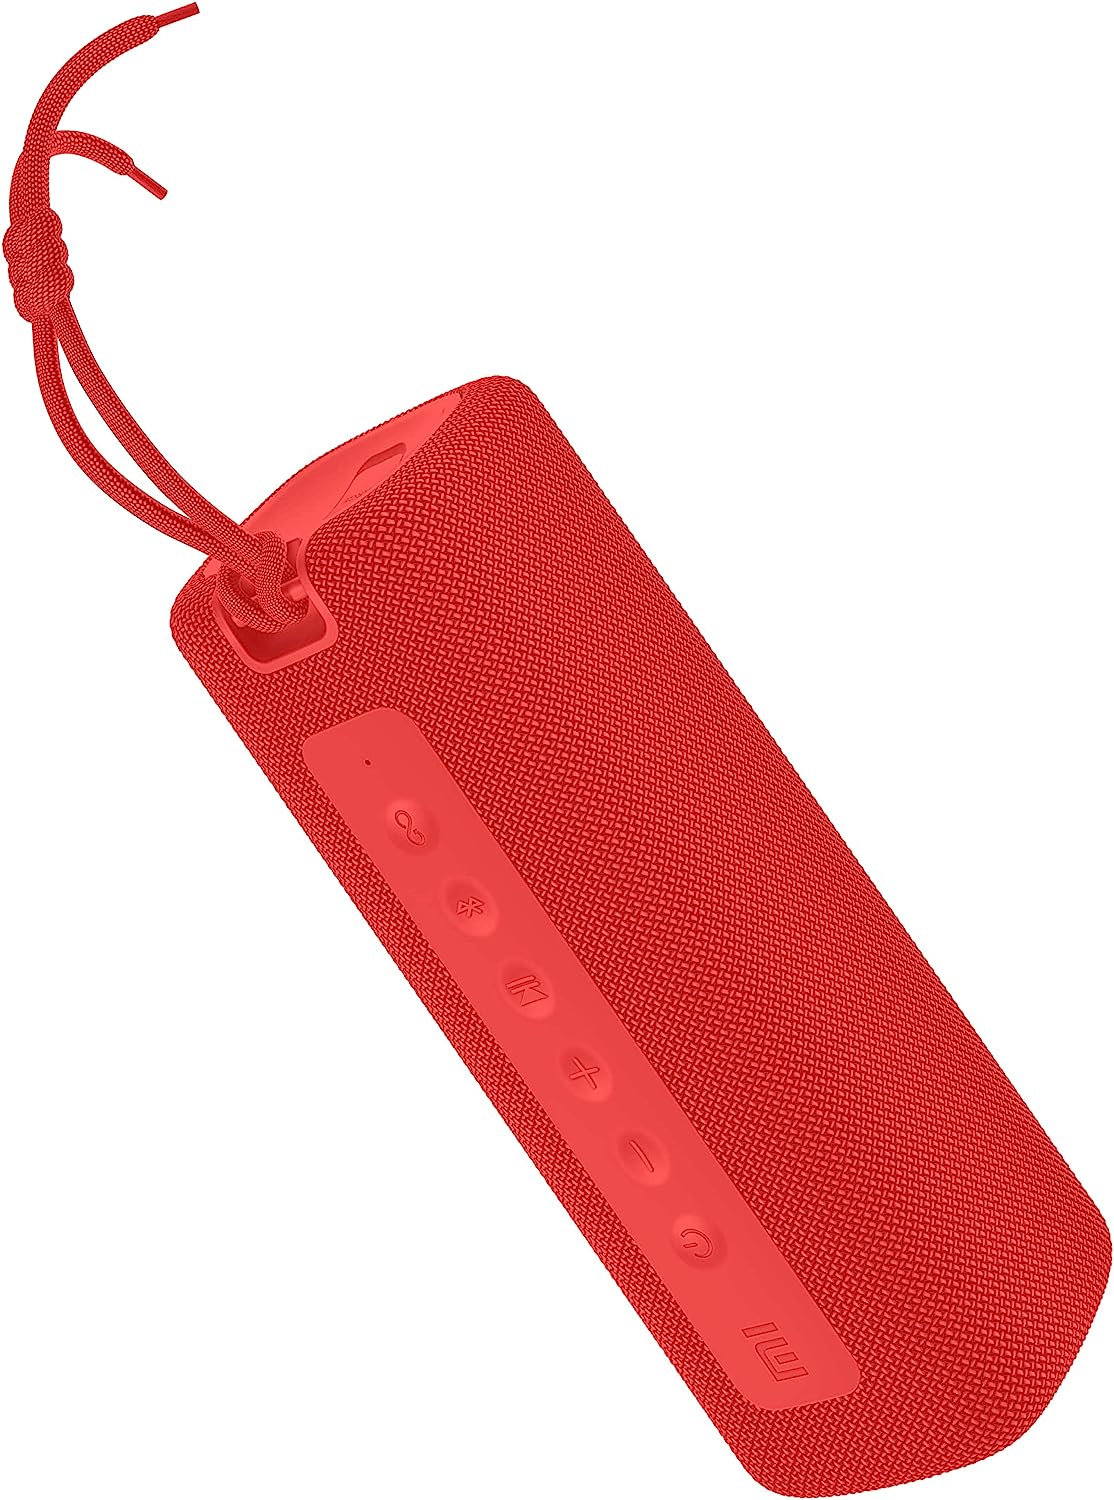 Mi Portable Bluetooth Speaker(16W) RED